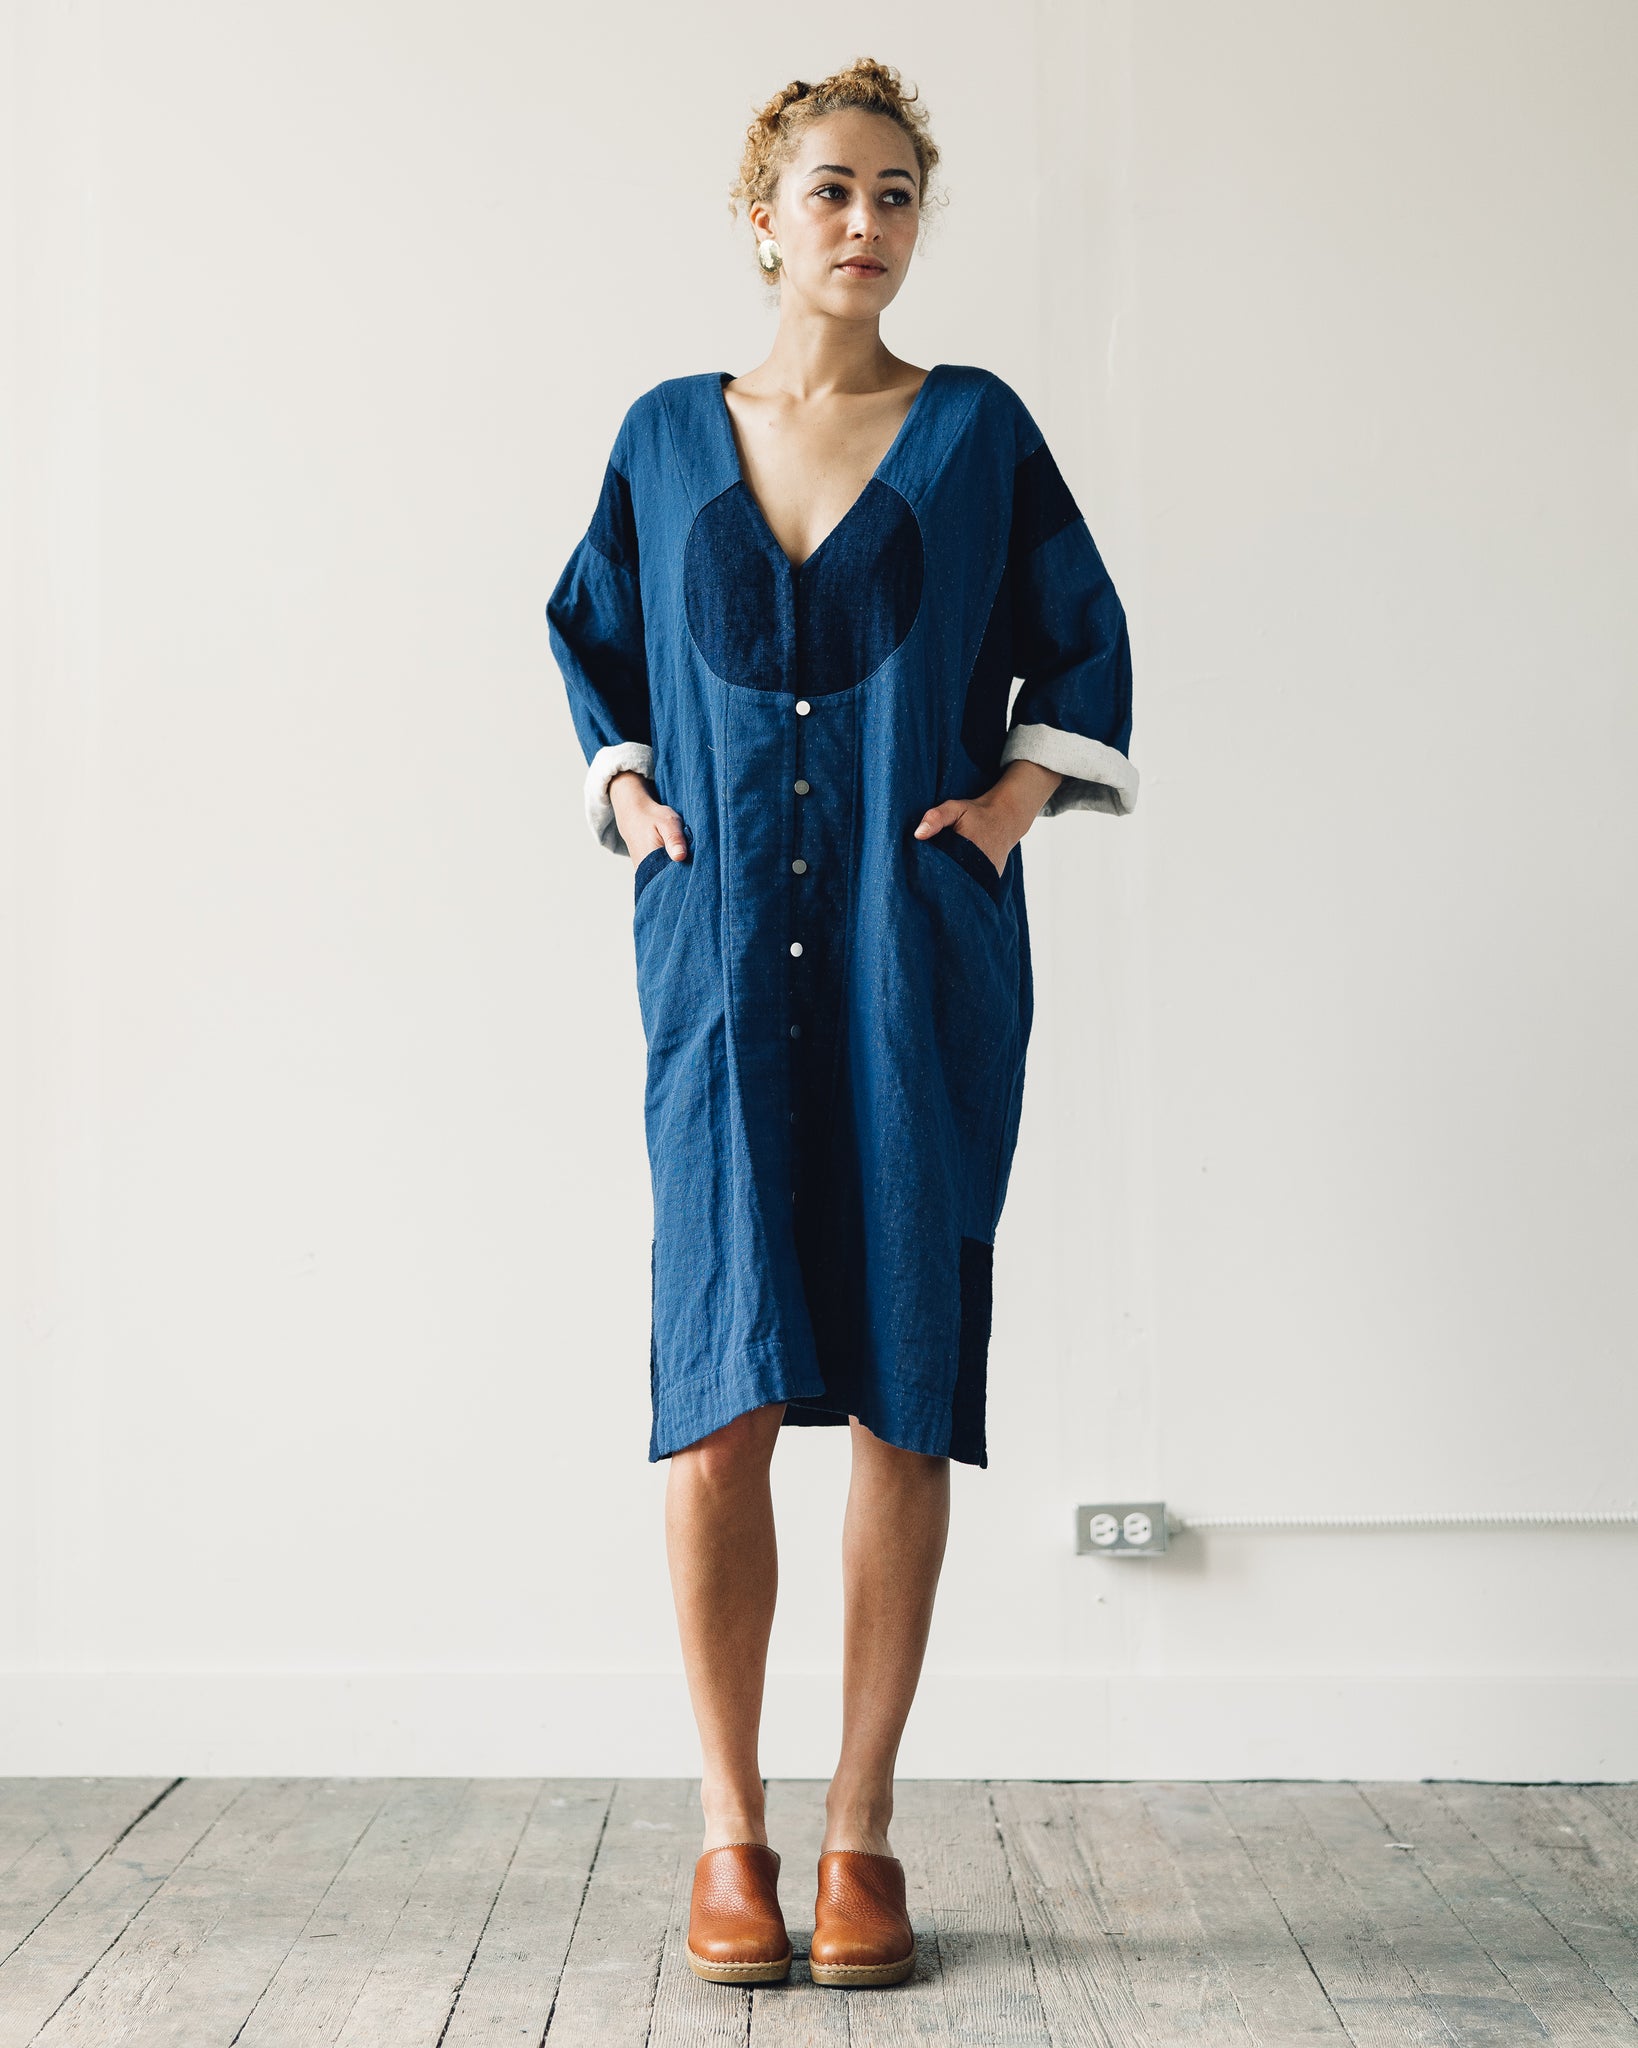 Atelier Delphine Gillian Coat, Patchwork Indigo